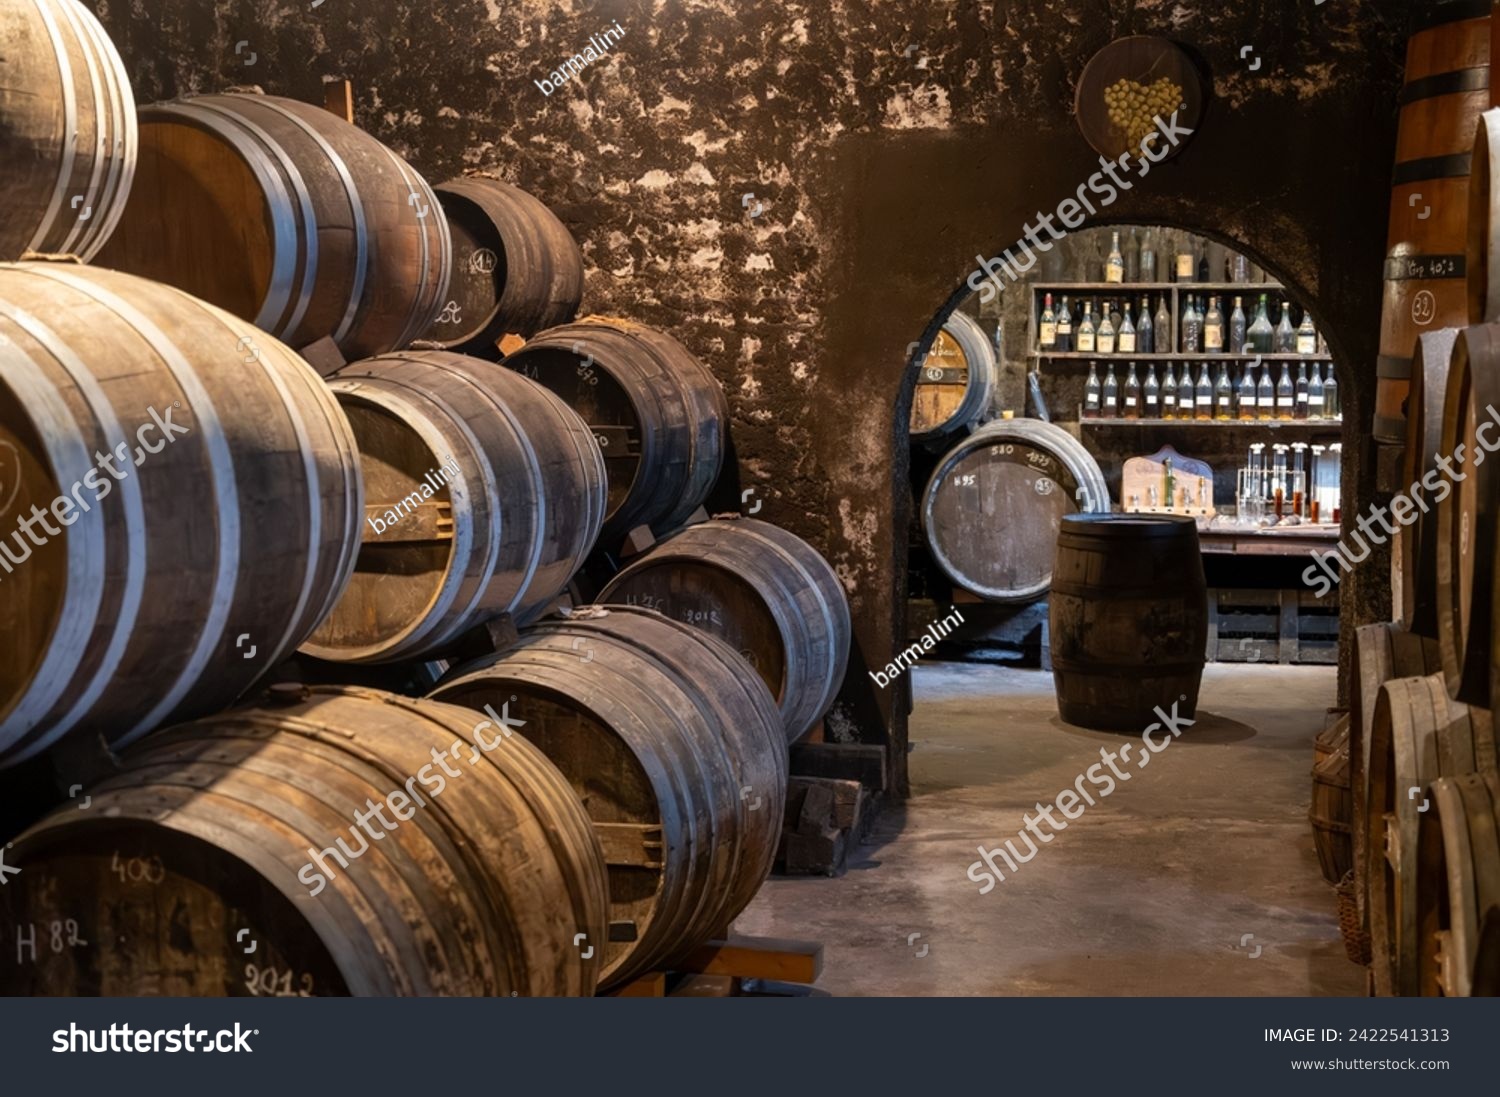 Aging process of cognac spirit in old dark French oak barrels in cellar in distillery house, Cognac white wine region, Charente, Segonzac, Grand Champagne, France #2422541313